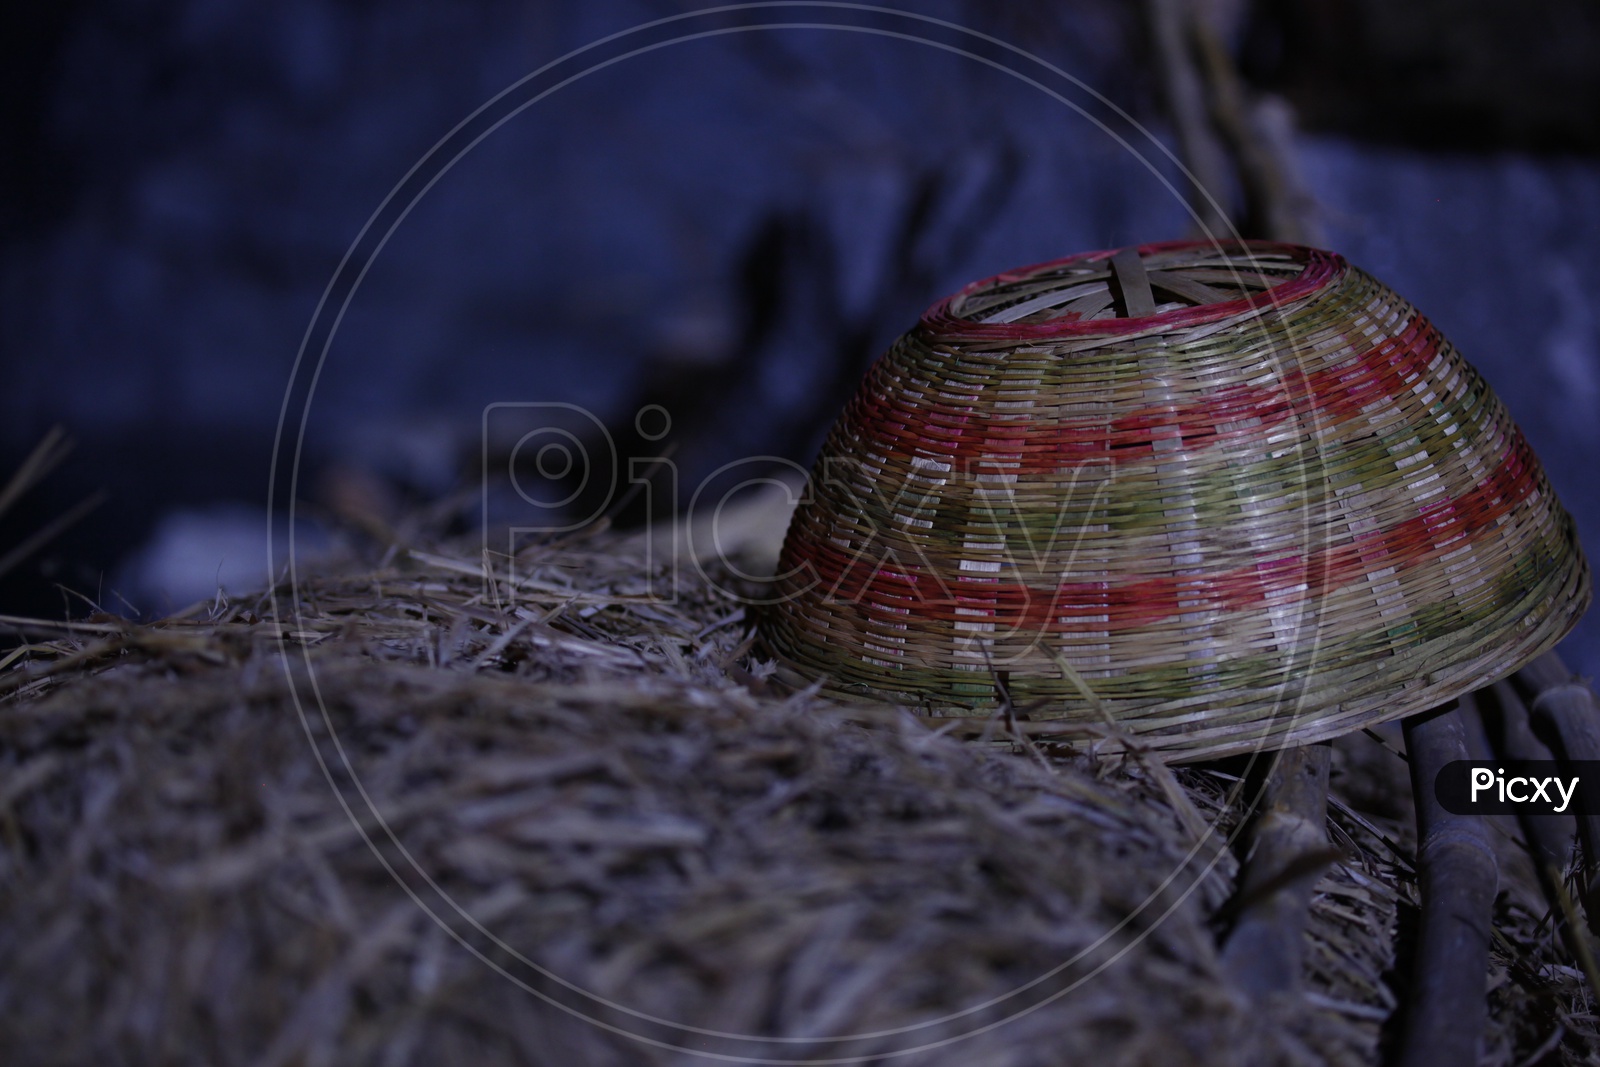 Bamboo woven basket